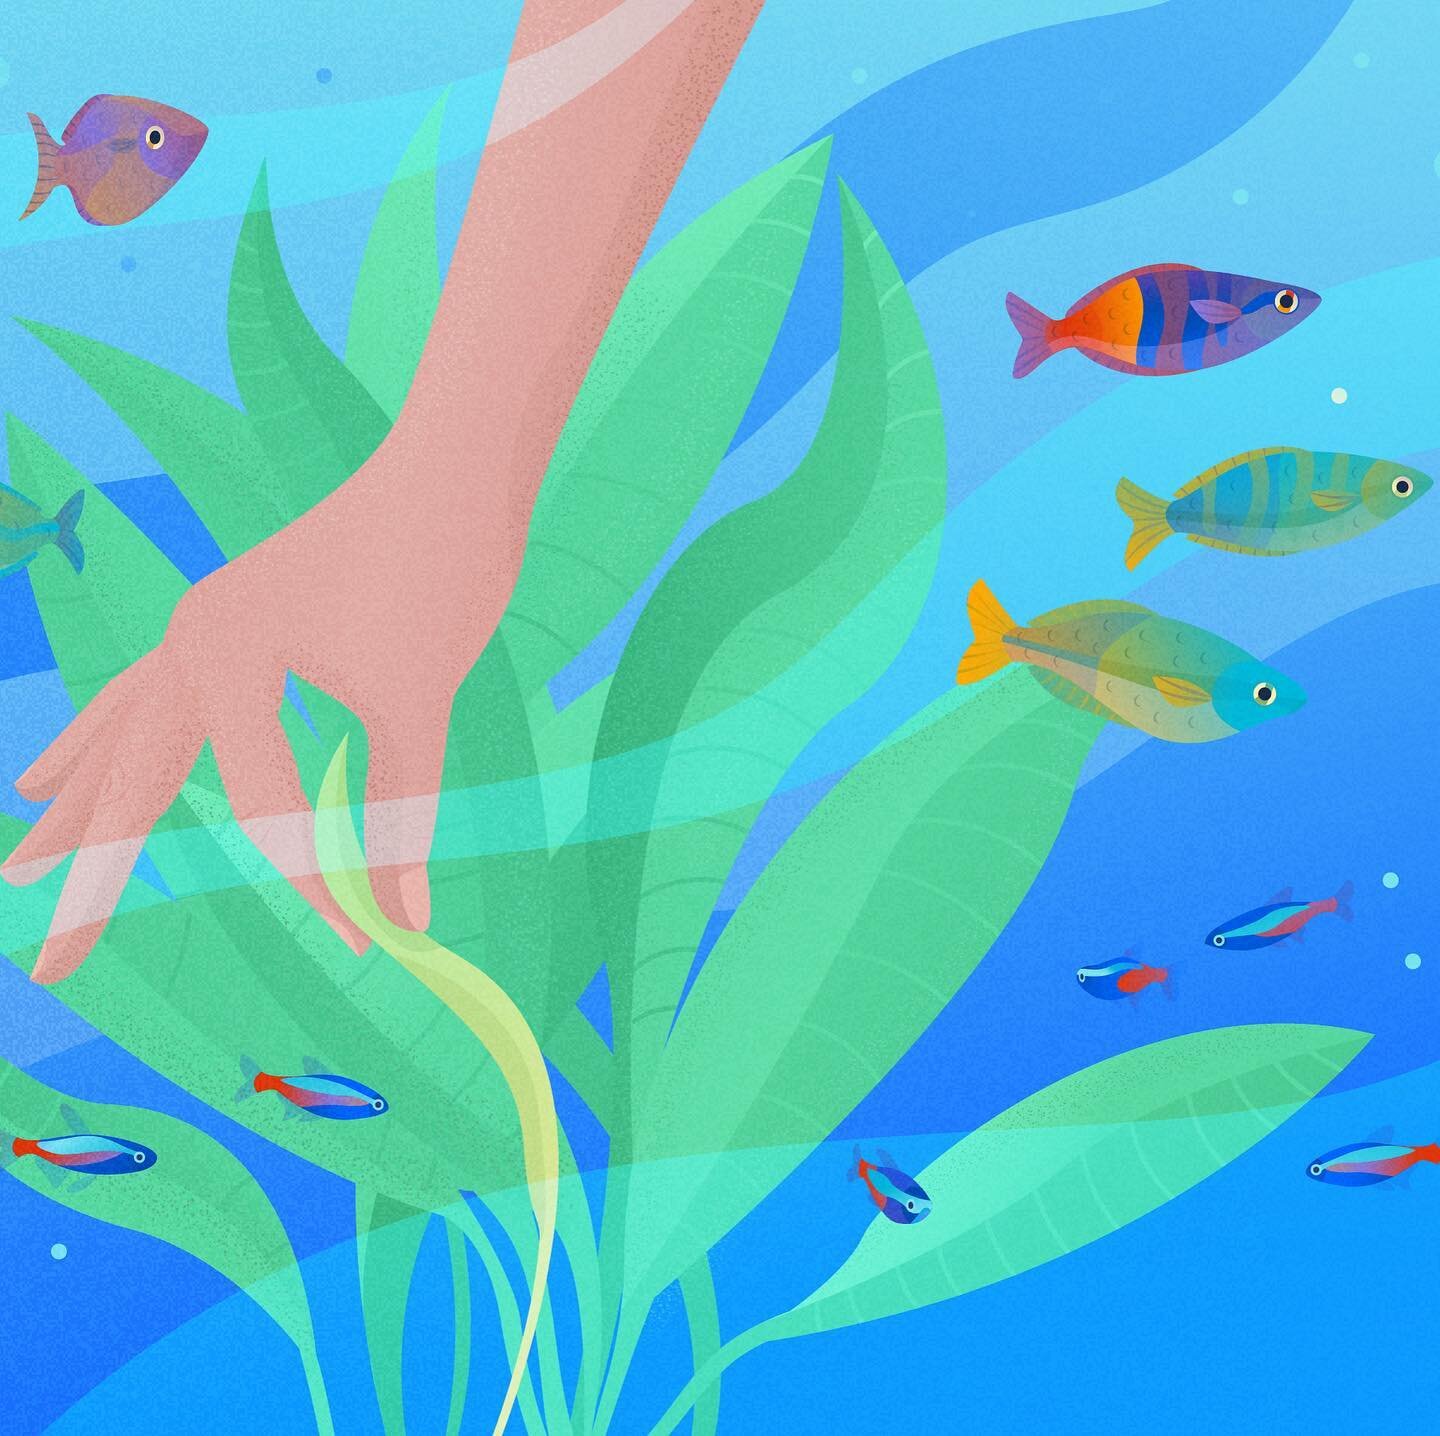 Time for some tidying up 🌱
&bull;
&bull;
&bull;
#fishtank #rainbowfish #tropical #aquarium #aquariums #waterchange #cleaning #illustration #illustrationartists #illustrationart #illustrationoftheday